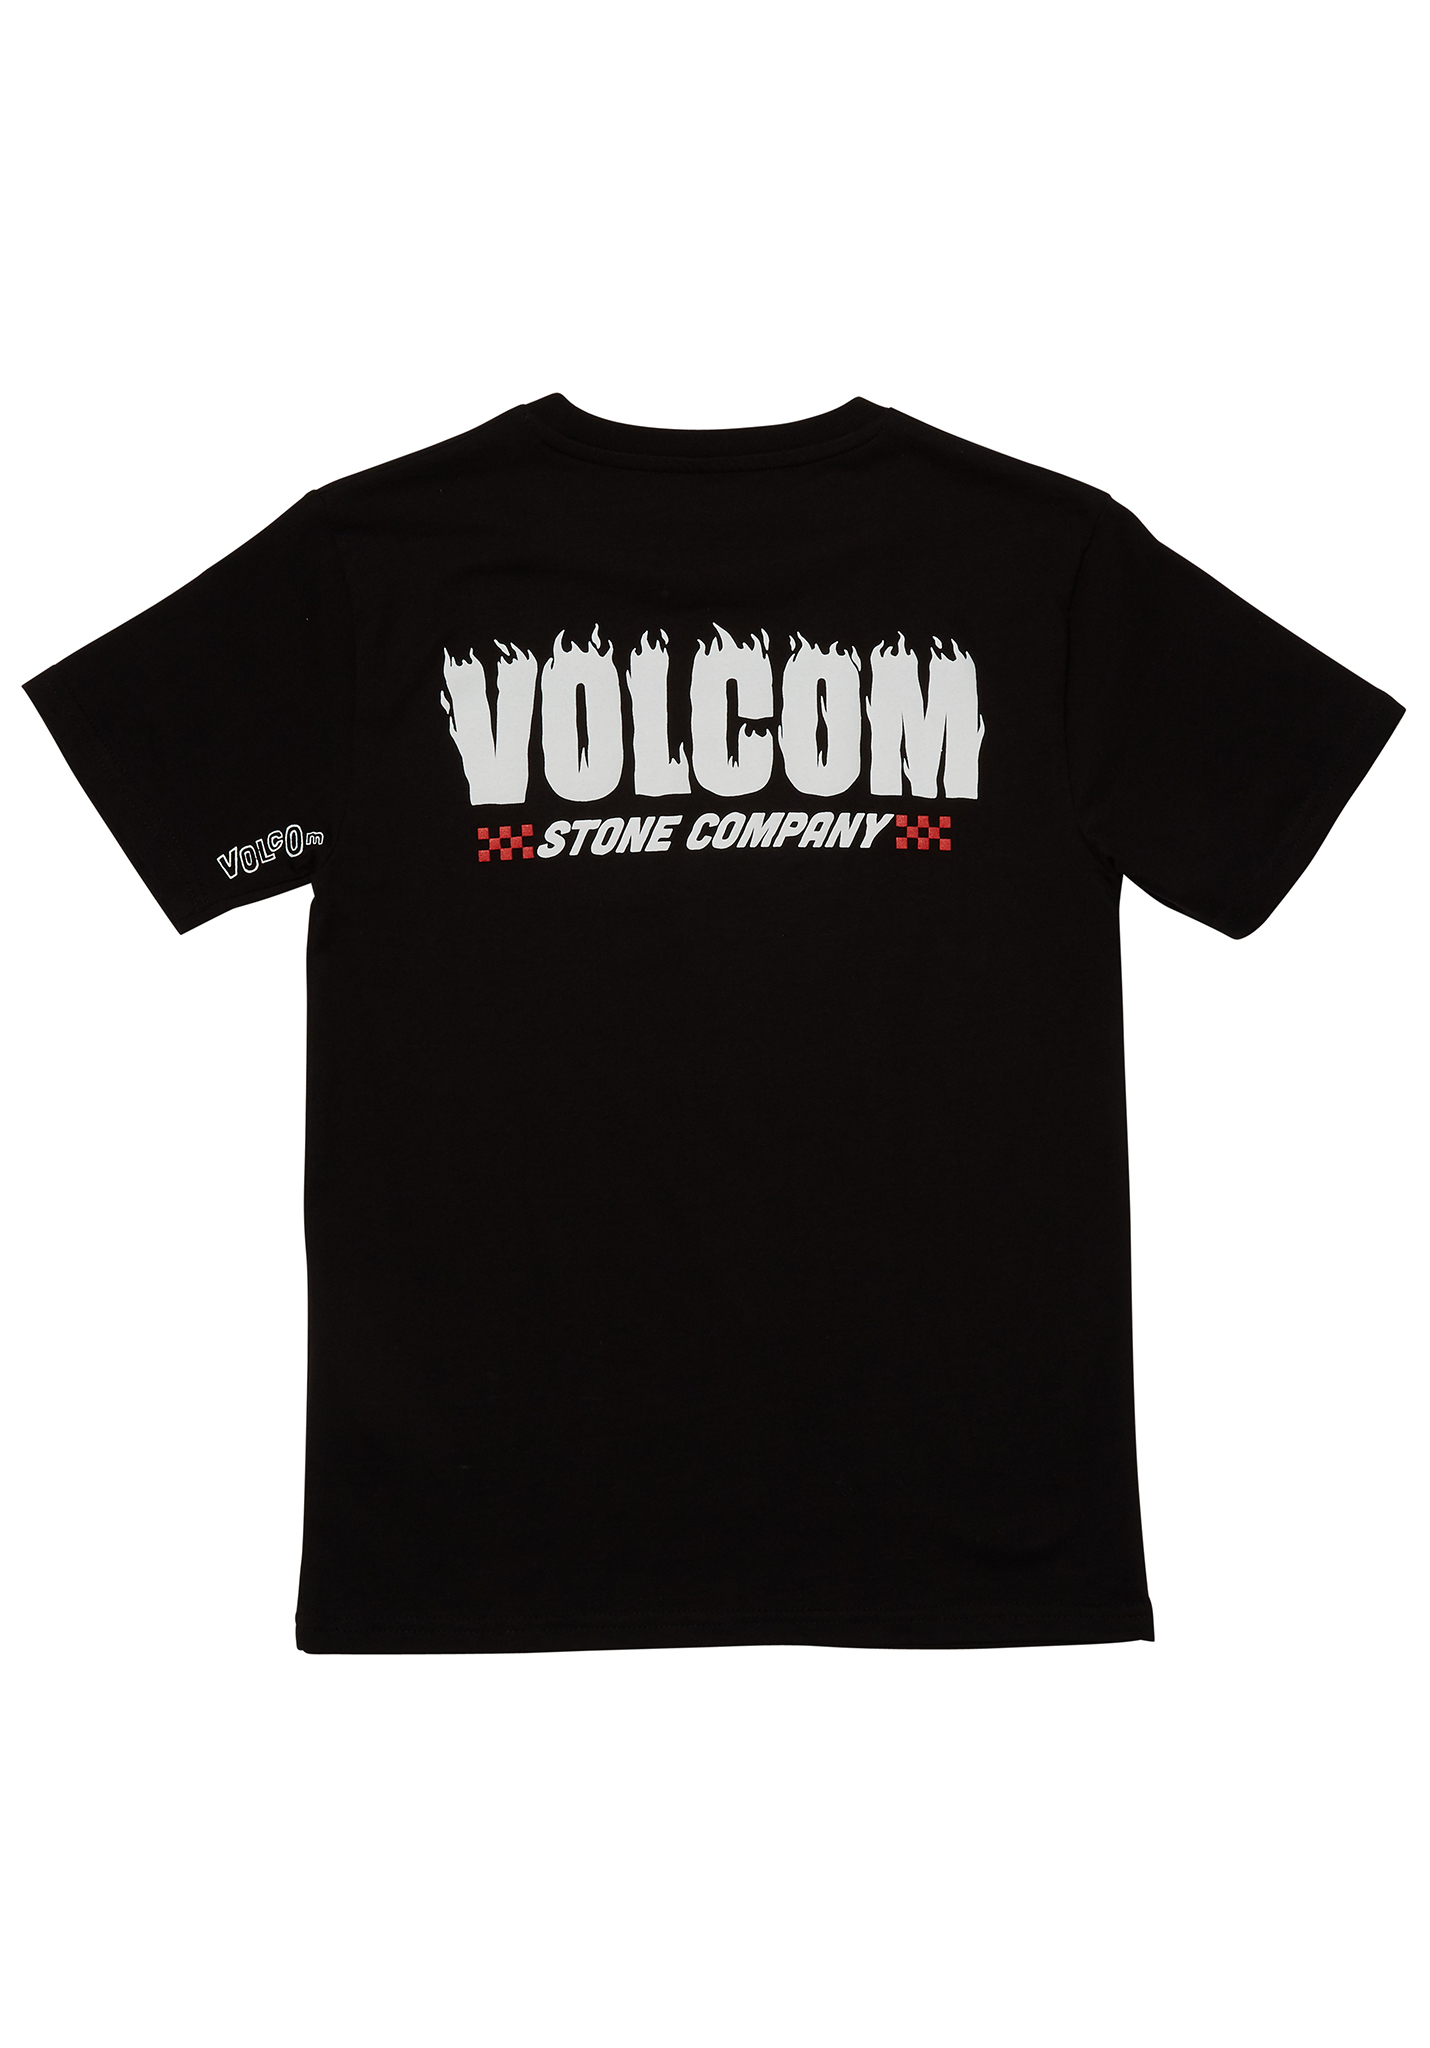 Volcom Company Stone T-Shirt black M